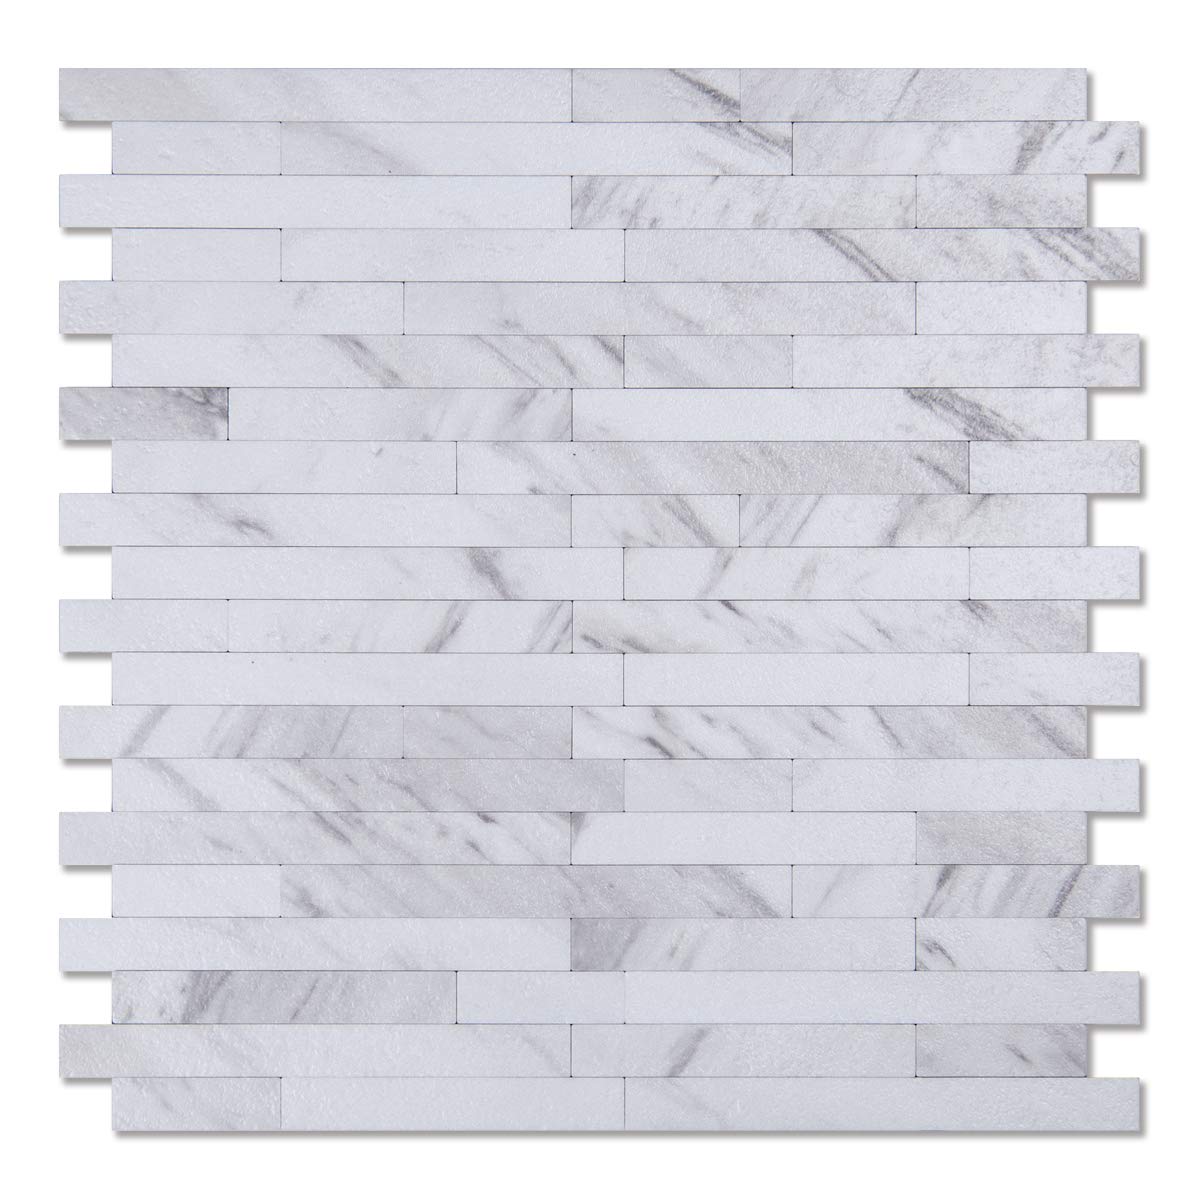 A16614-Art3d 10-Sheet Peel and Stick Stone Backsplash Tile for Kitchen, Bathroom - Volakas White Embellished with Metal Silver